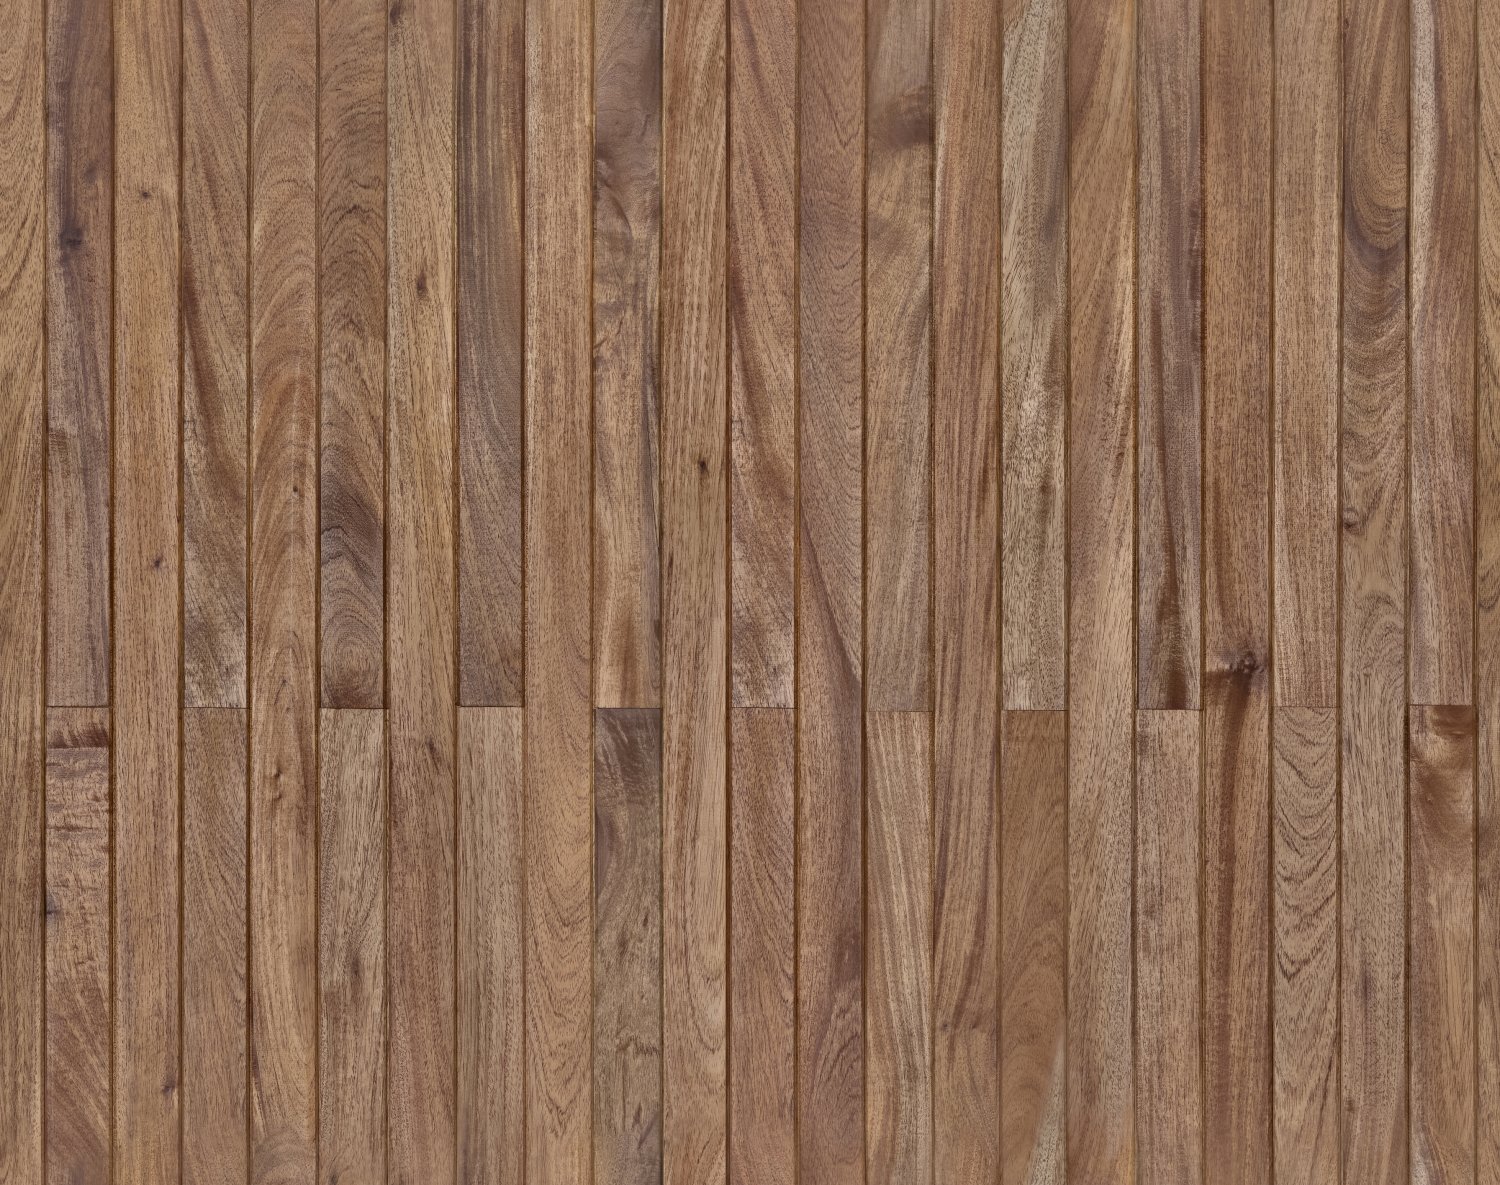 High Resolution Wood Flooring Texture Seamless Wood Flooring Design Images 